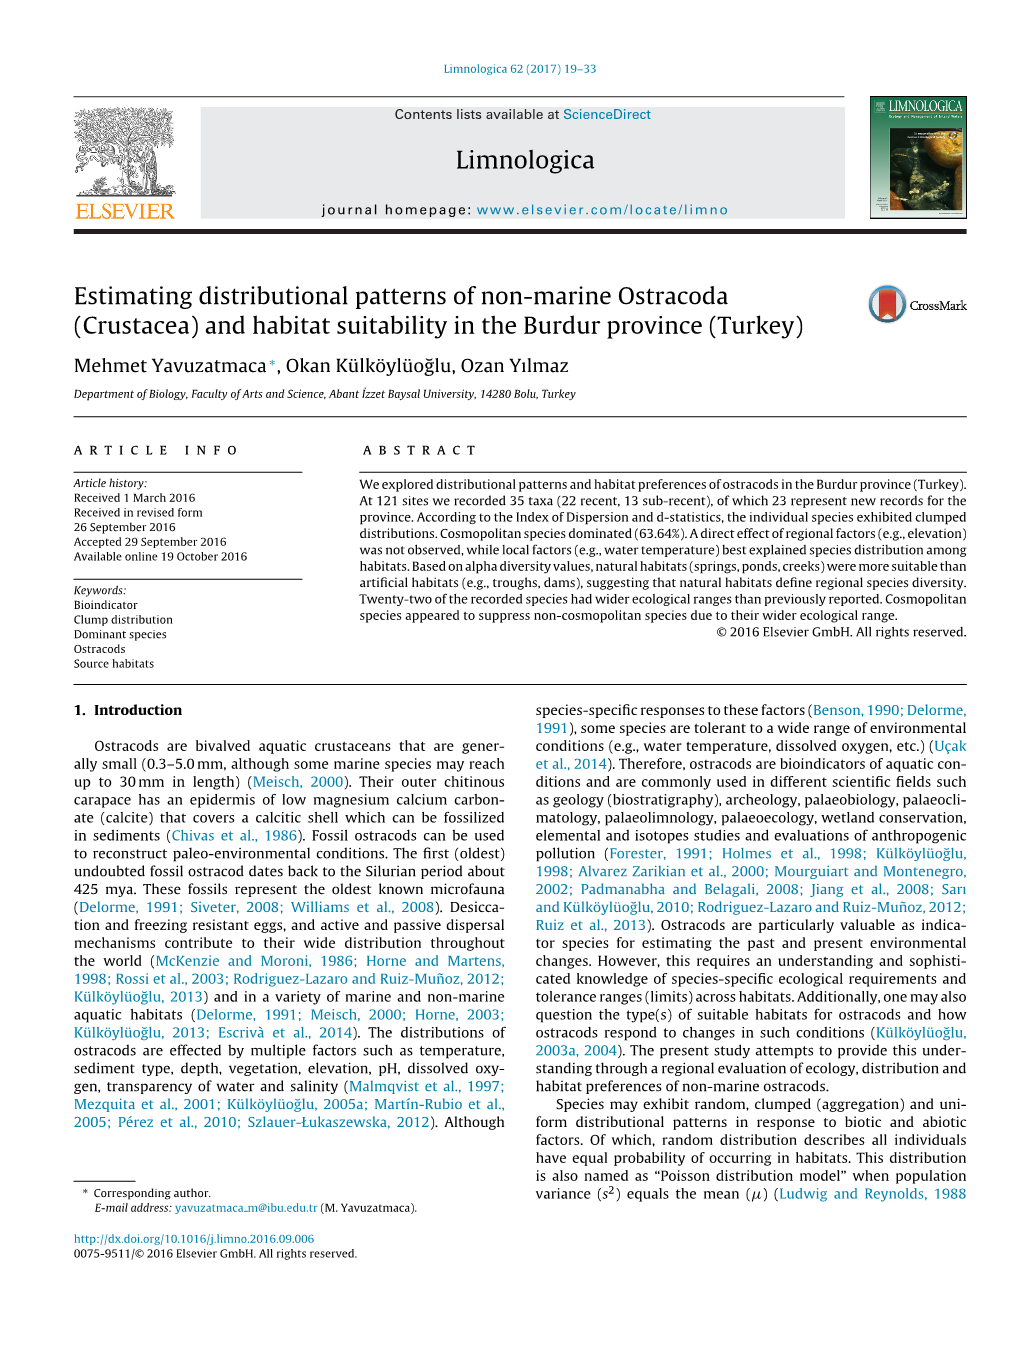 Estimating Distributional Patterns of Non-Marine Ostracoda (Crustacea